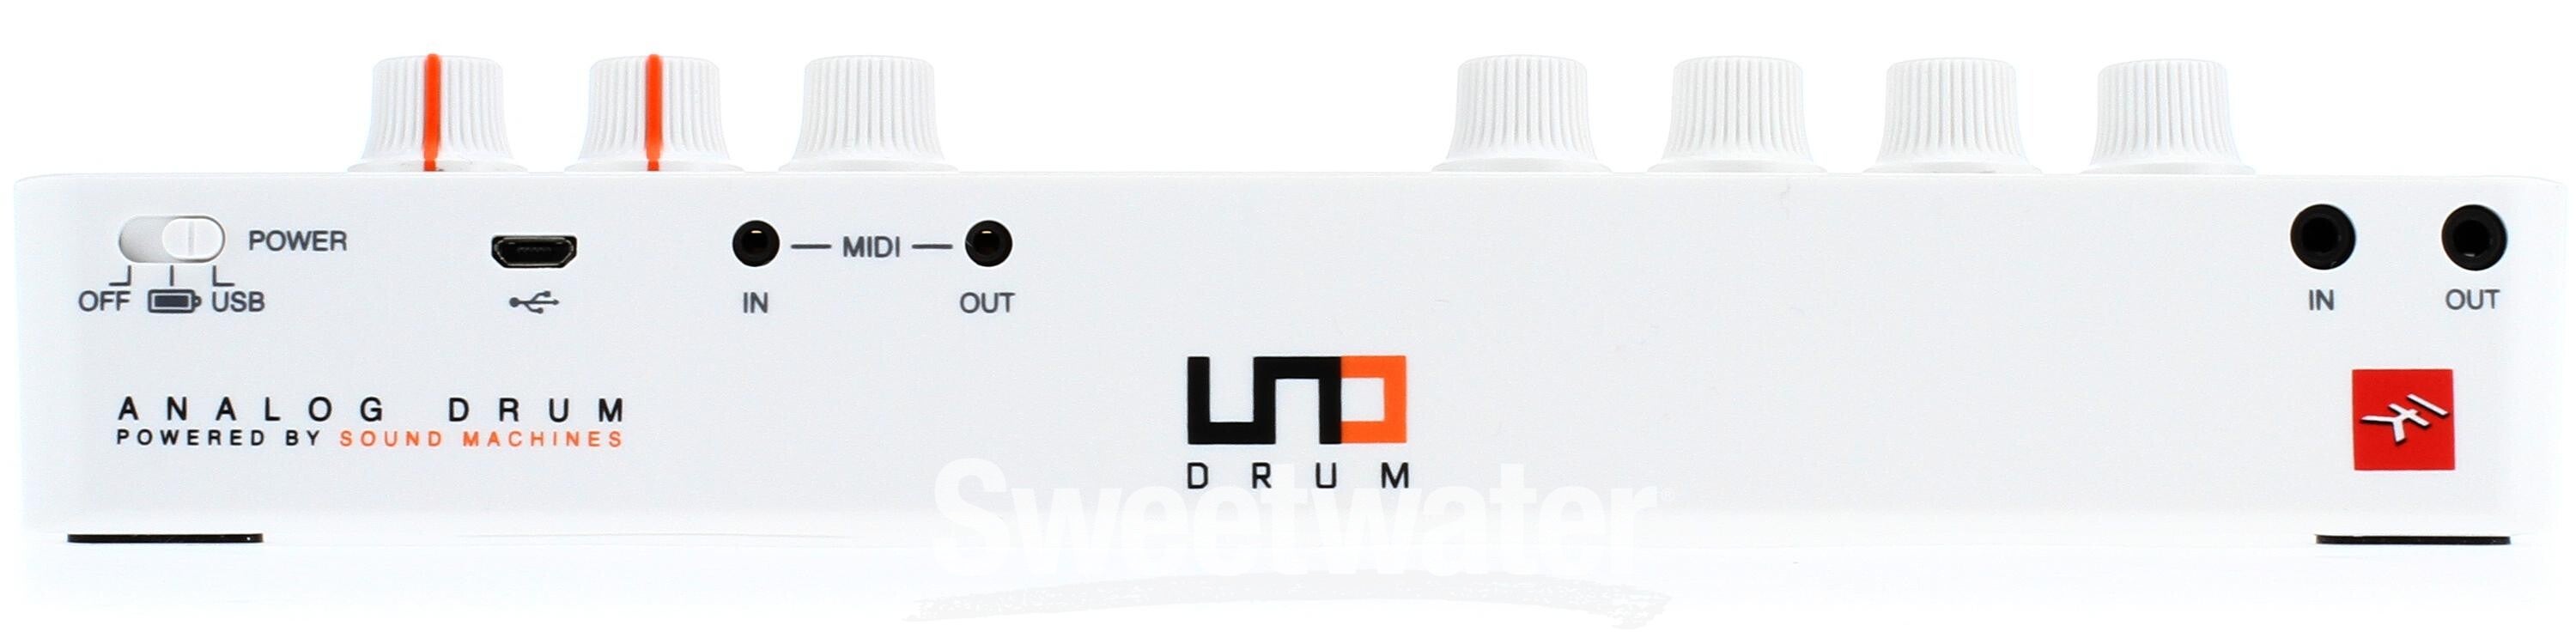 IK Multimedia UNO Drum - Drum Machine Reviews | Sweetwater